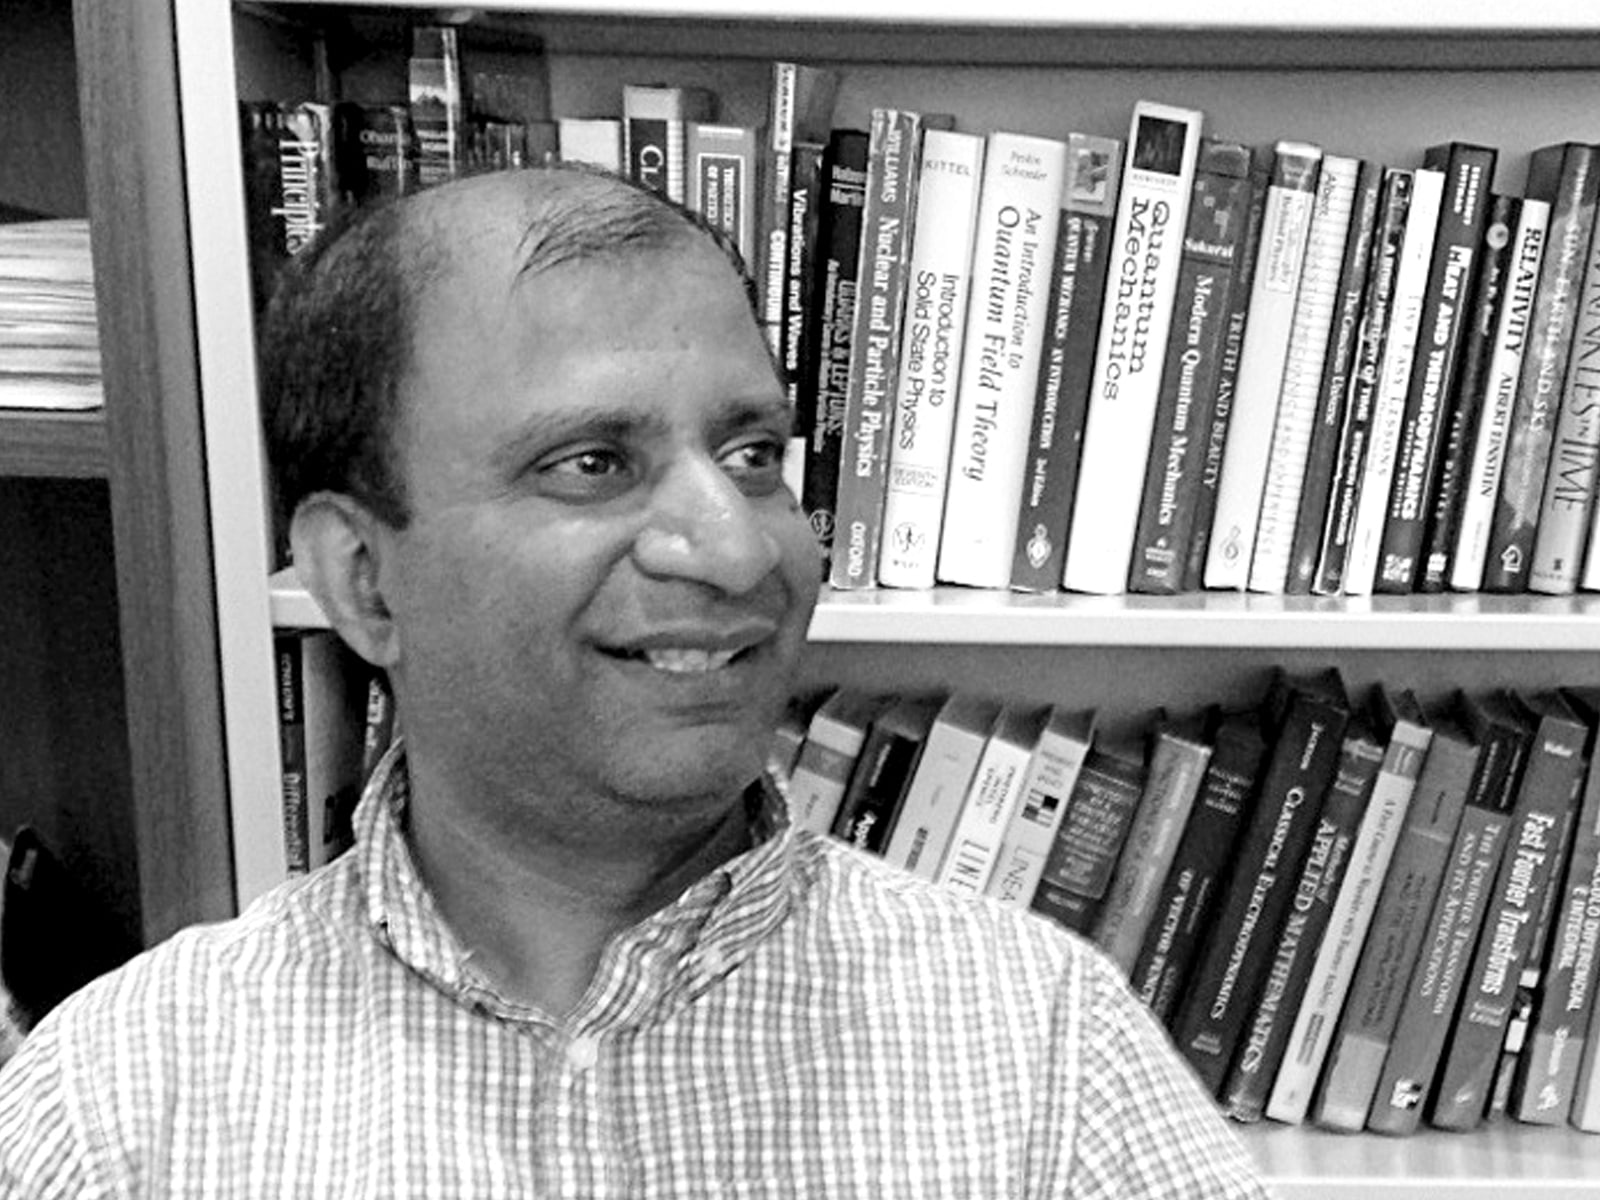 DigiPen computer science professor Pushpak Karnick in the DigiPen library